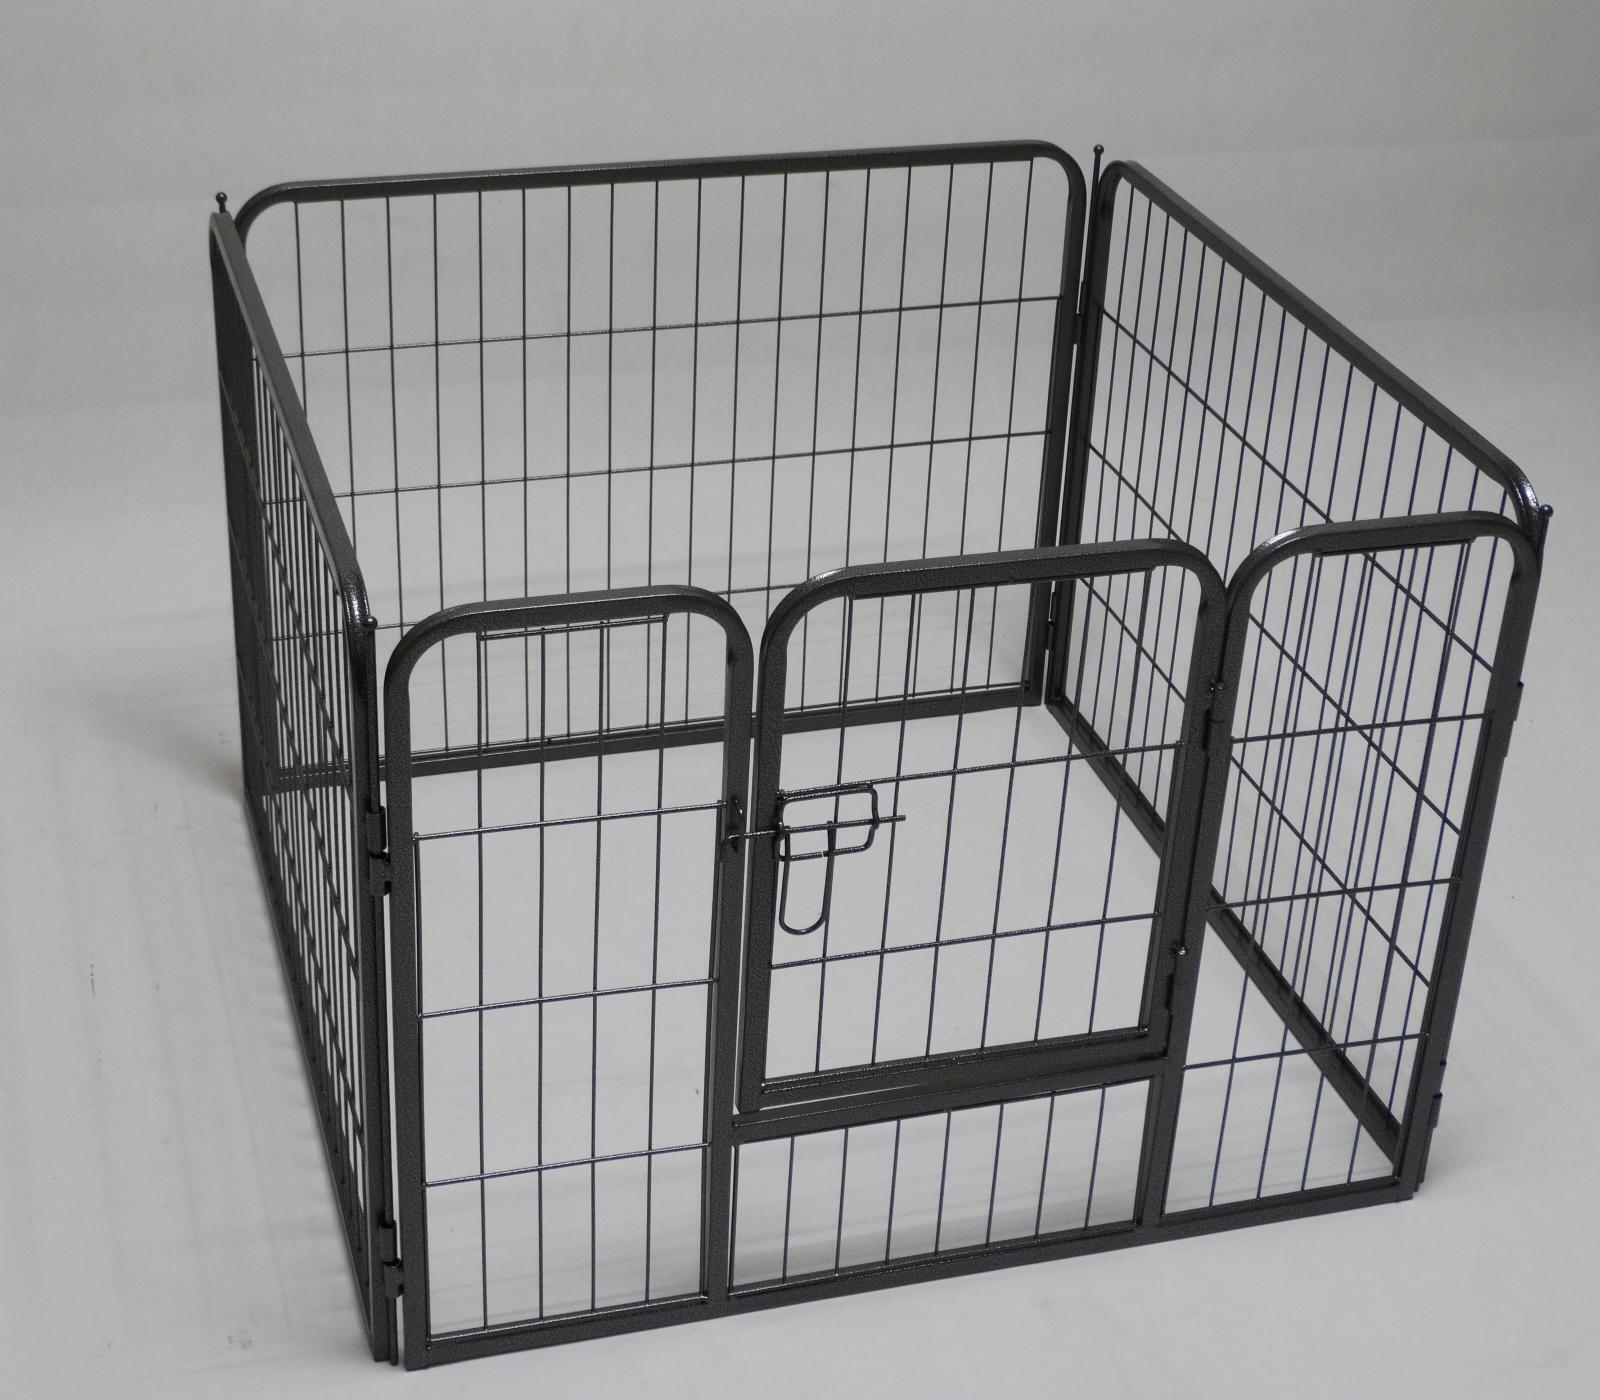 4 Panels 60 cm Heavy Duty Pet Dog Puppy Cat Rabbit Exercise Playpen Fence Extension